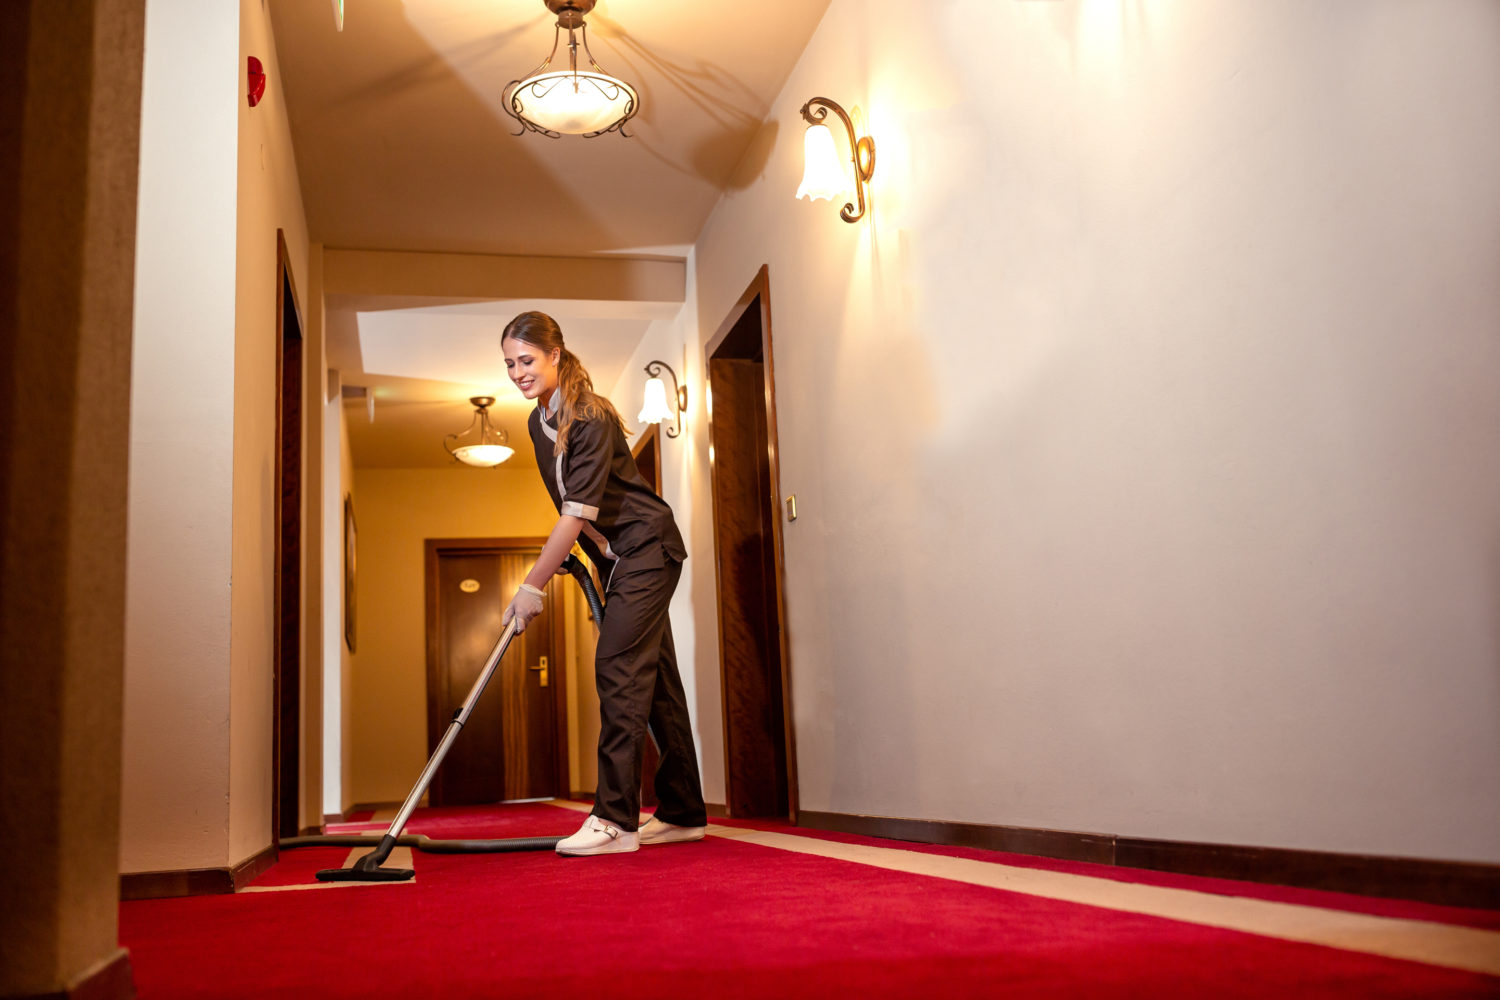 Housekeeping staff vacuuming an empty hallway